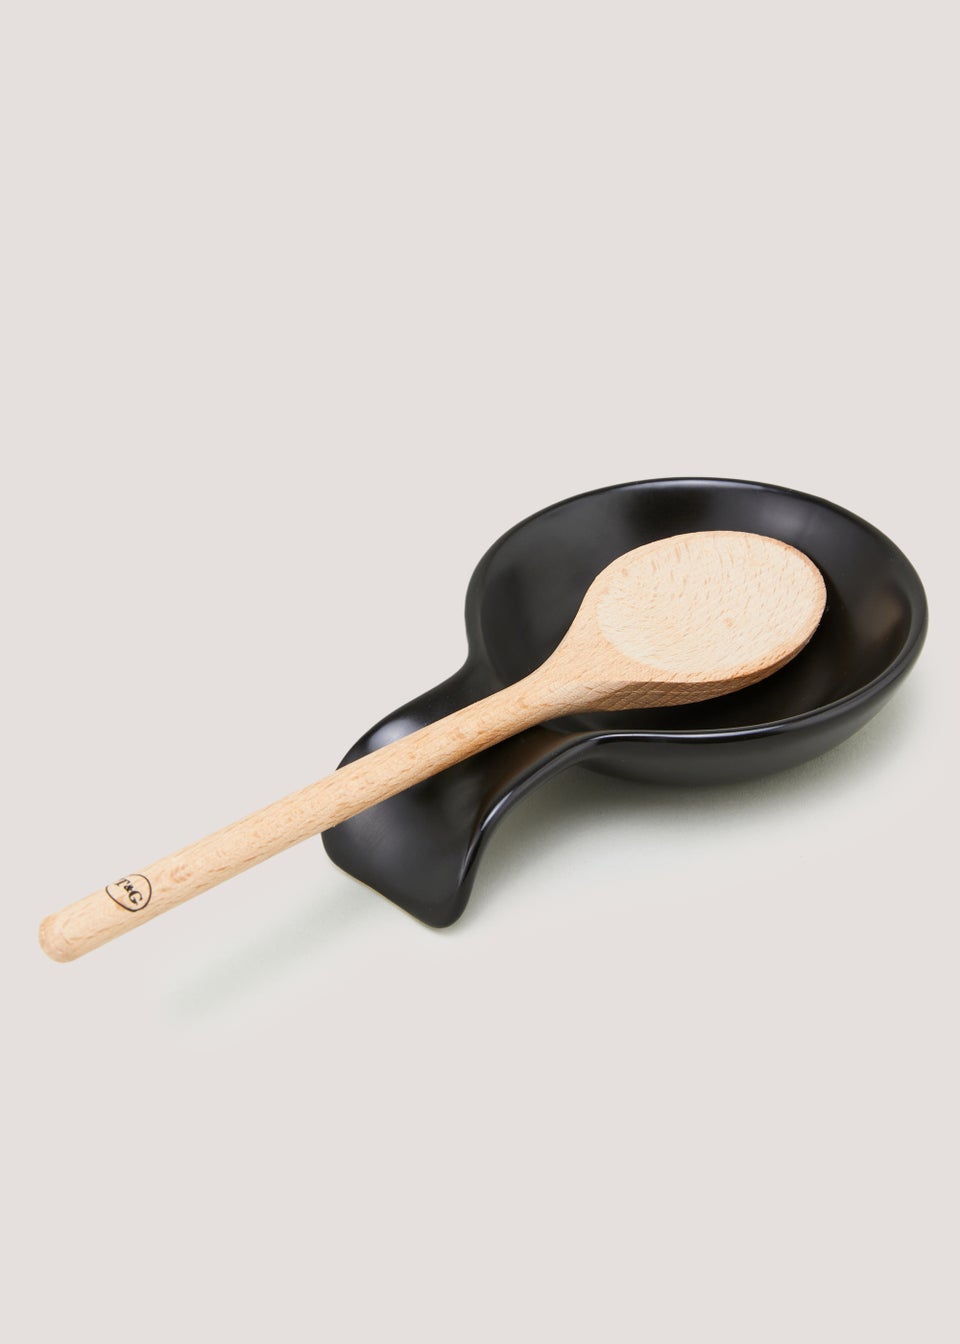 Black Spoon Rest (18cm x 12cm)